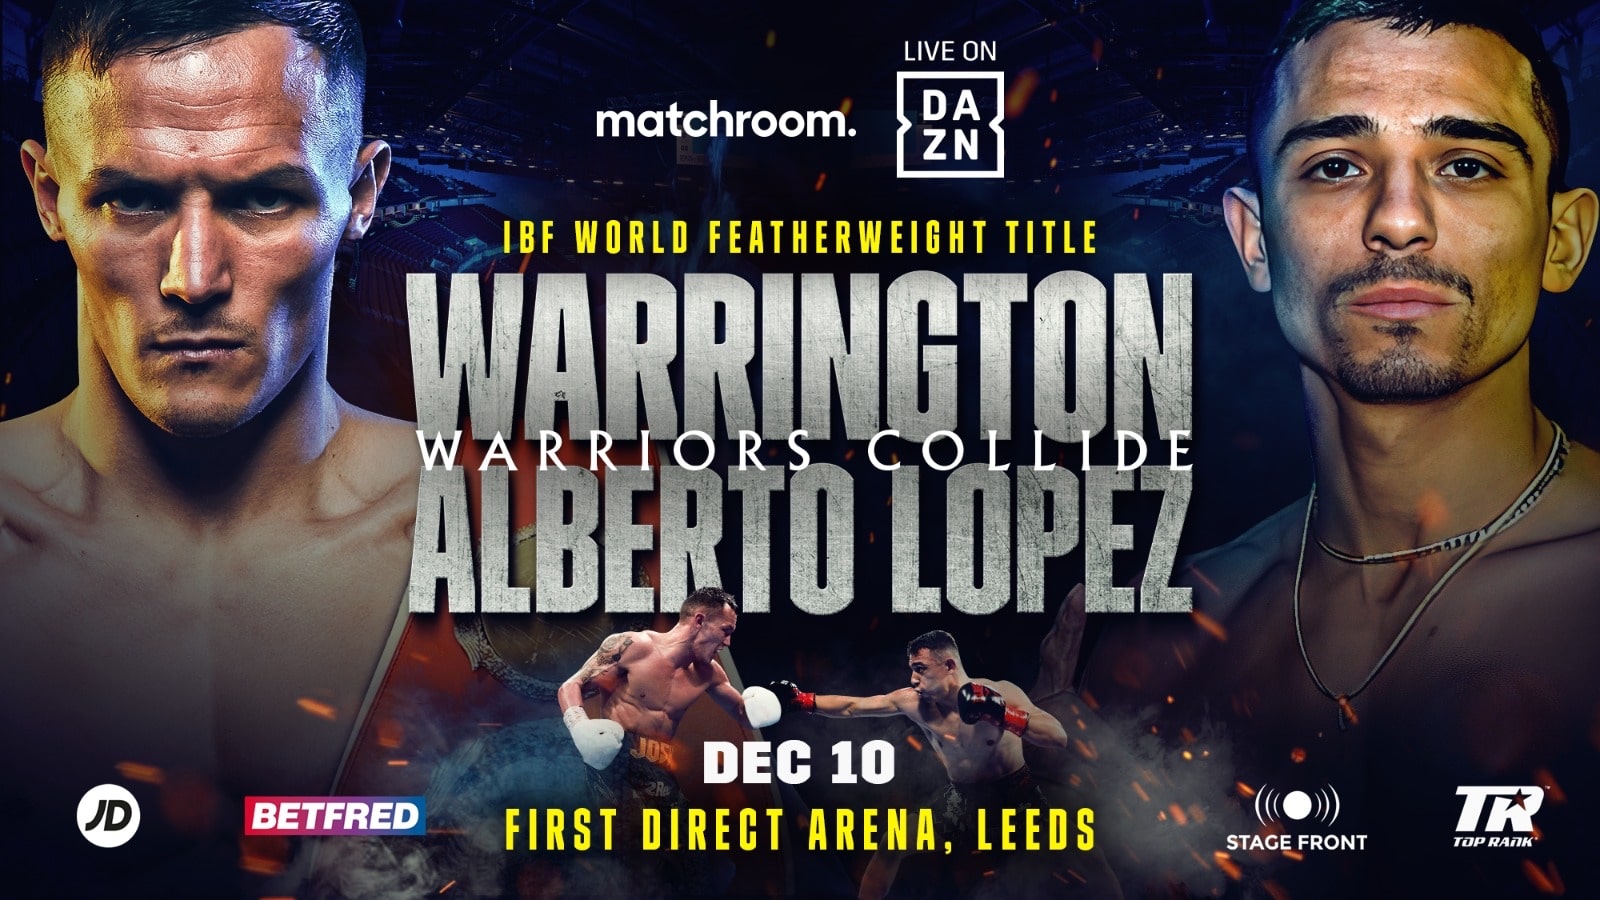 Josh Warrington vs Luis Alberto Lopez: How To Watch, Start Time